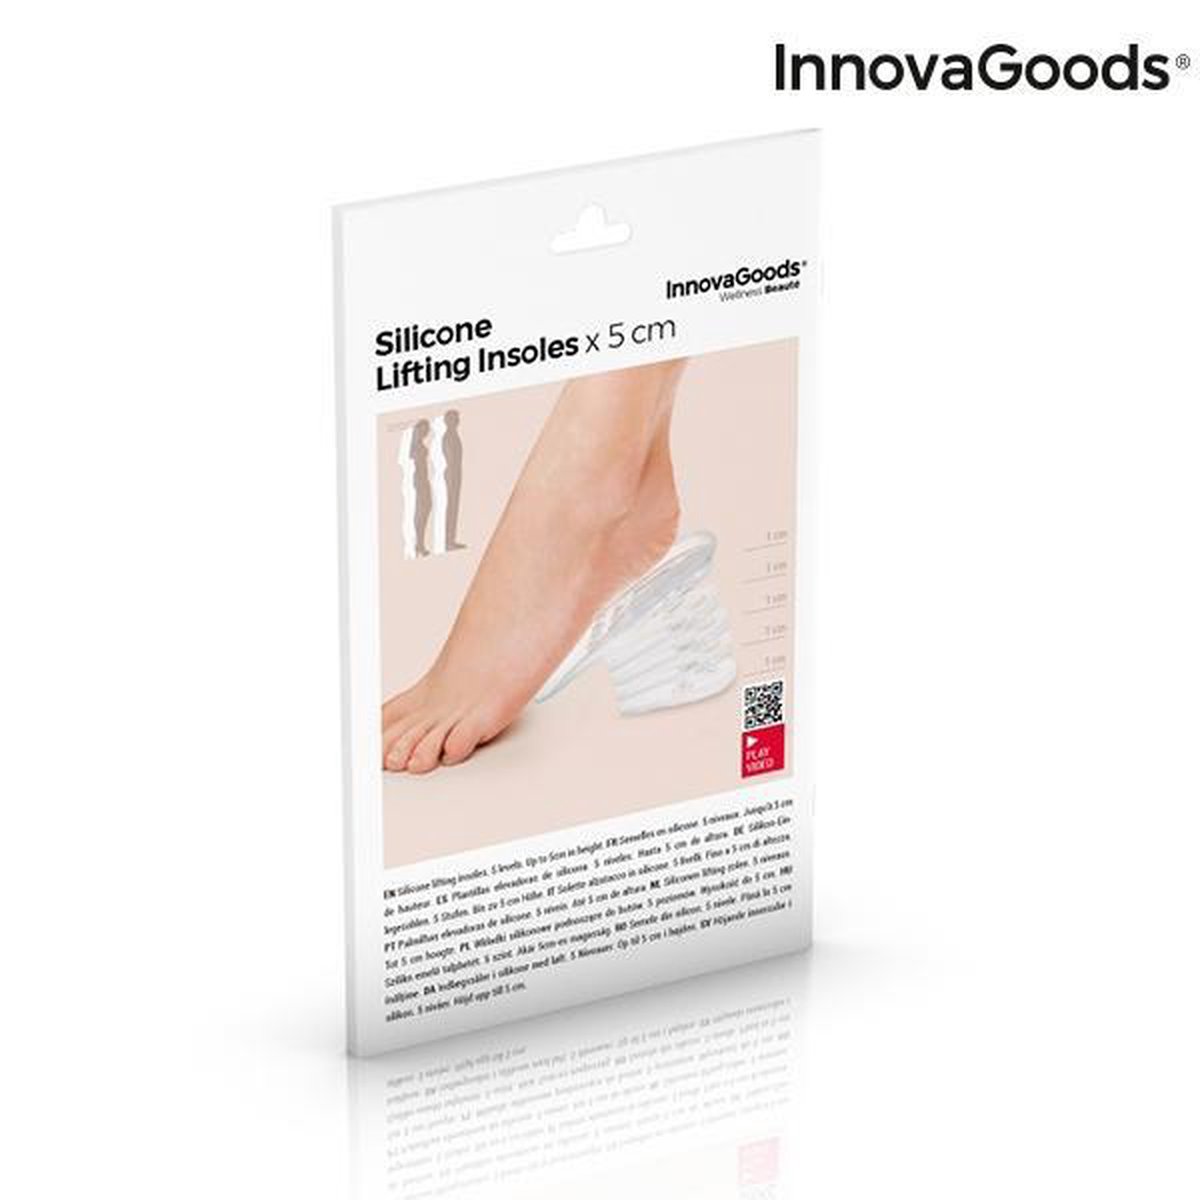 innovagoods augmentant les semelles de chaussures + 5 cm | bol.com